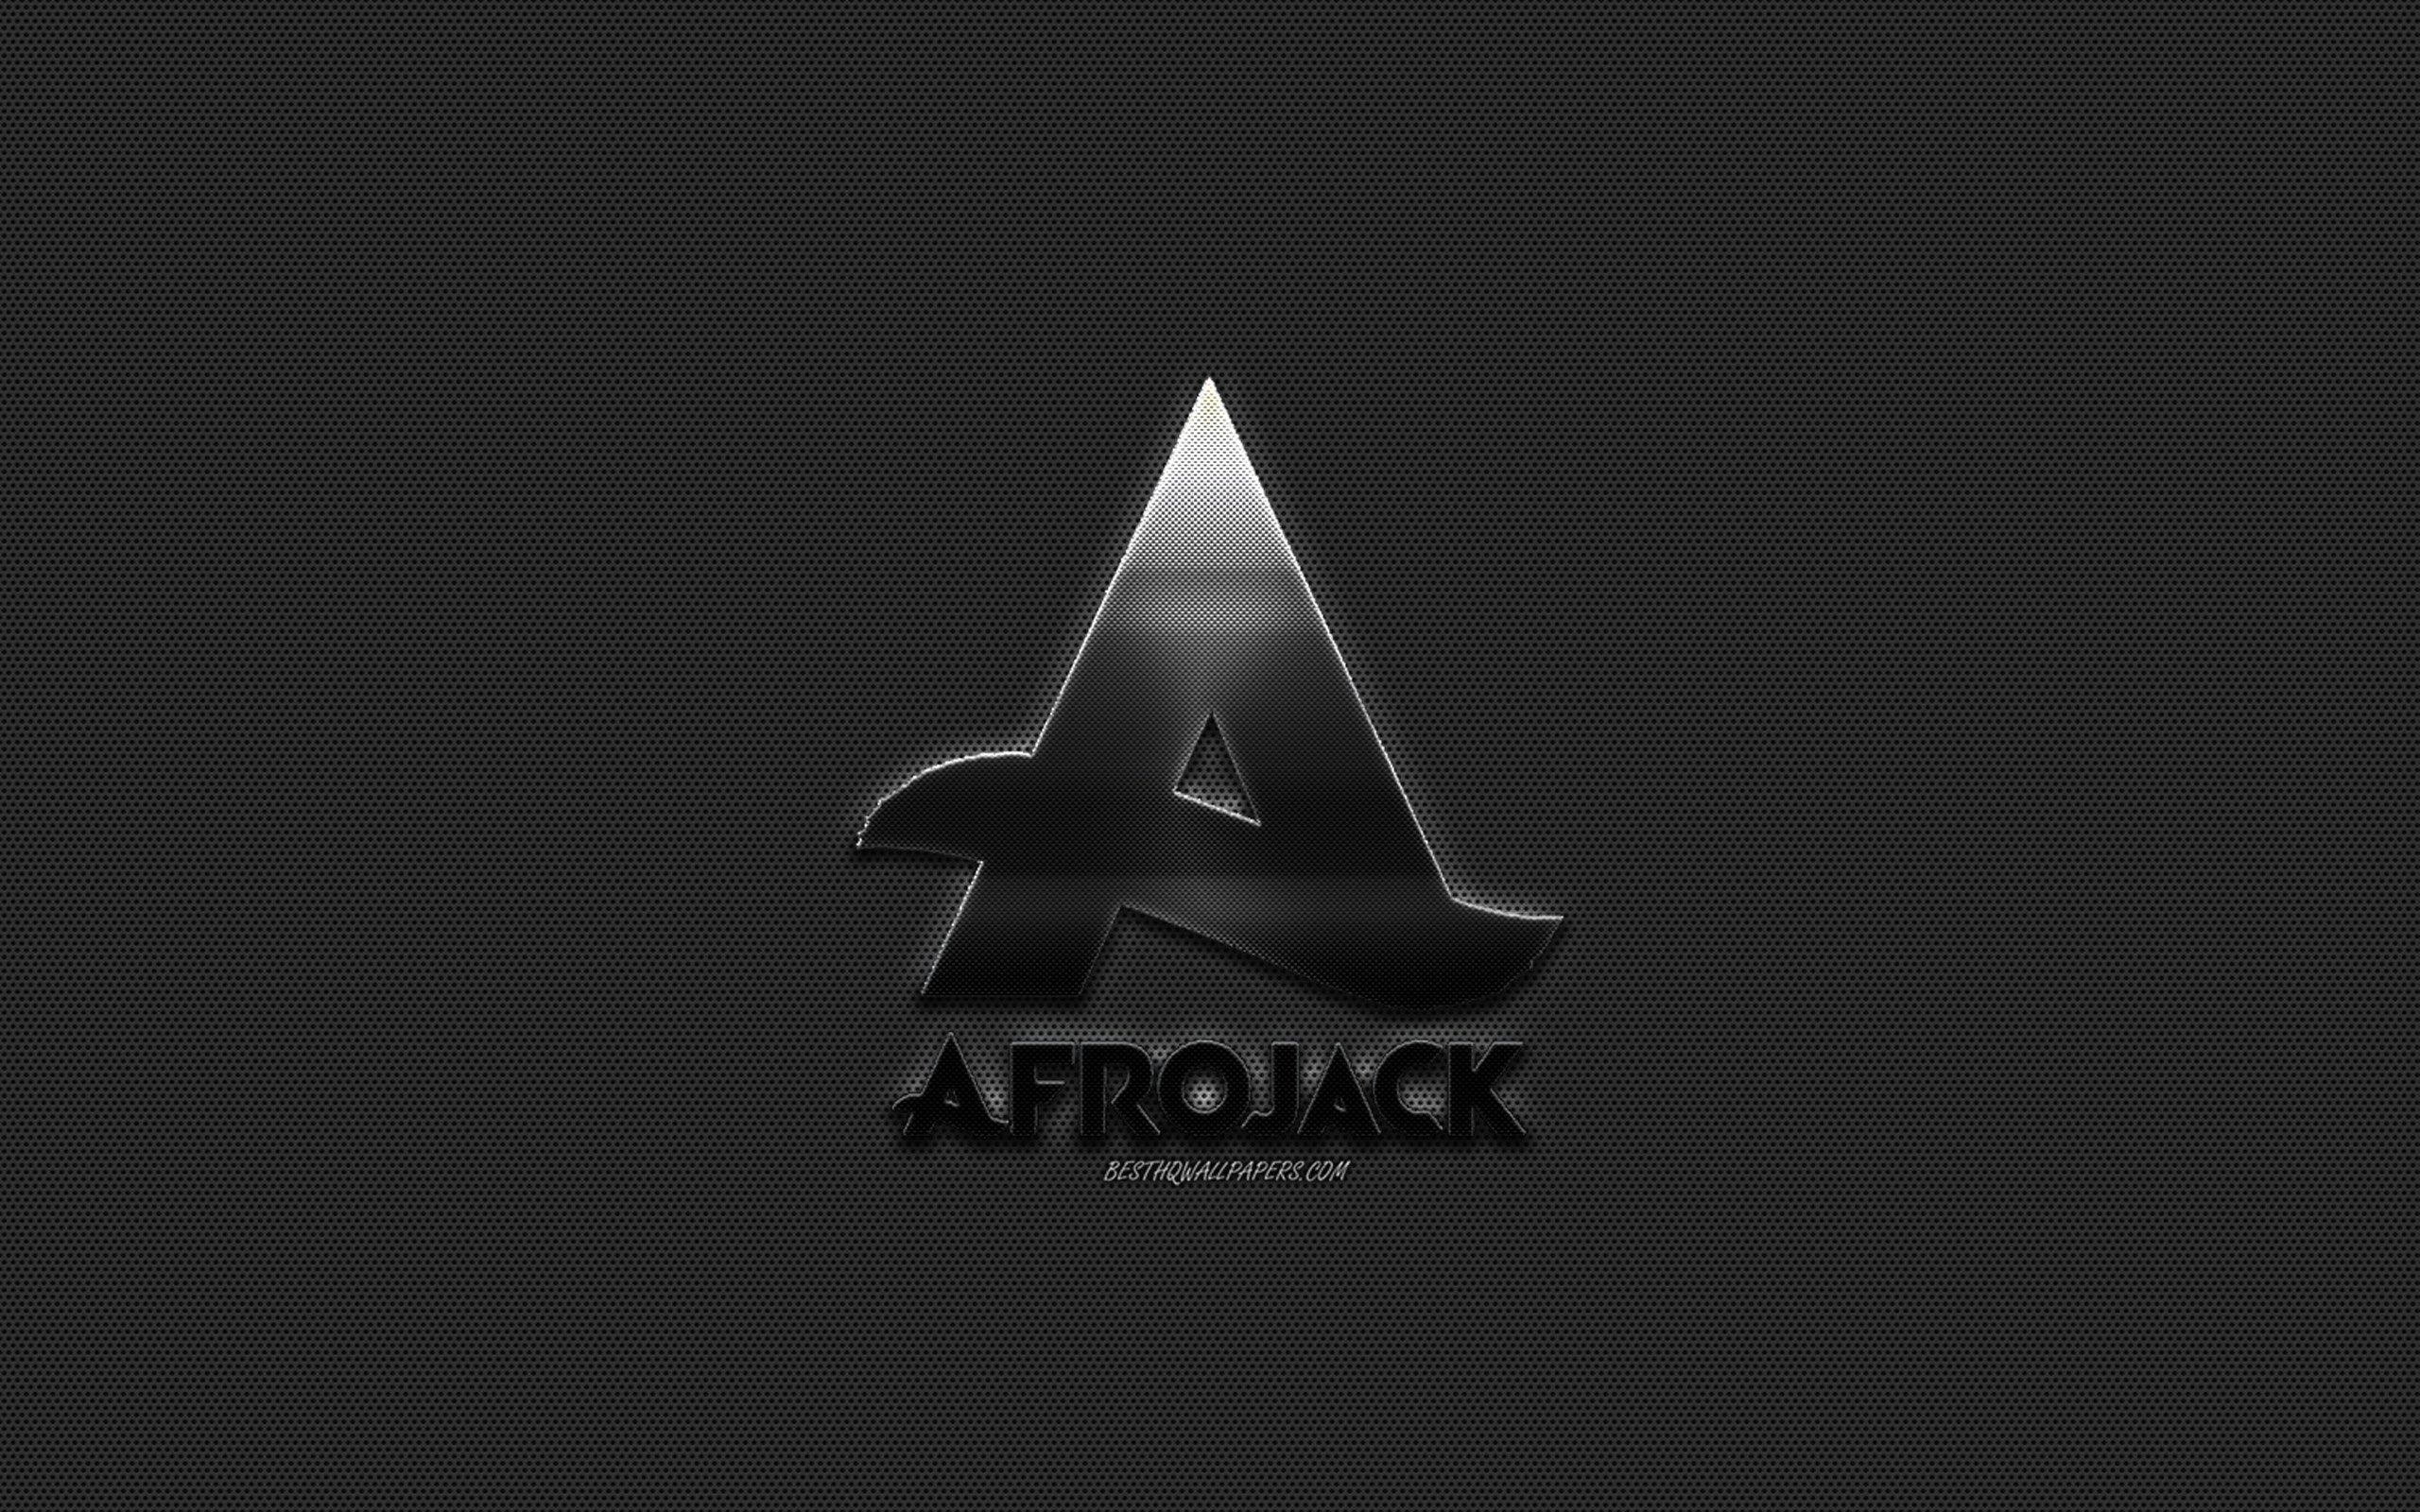 afrojack logo wallpaper